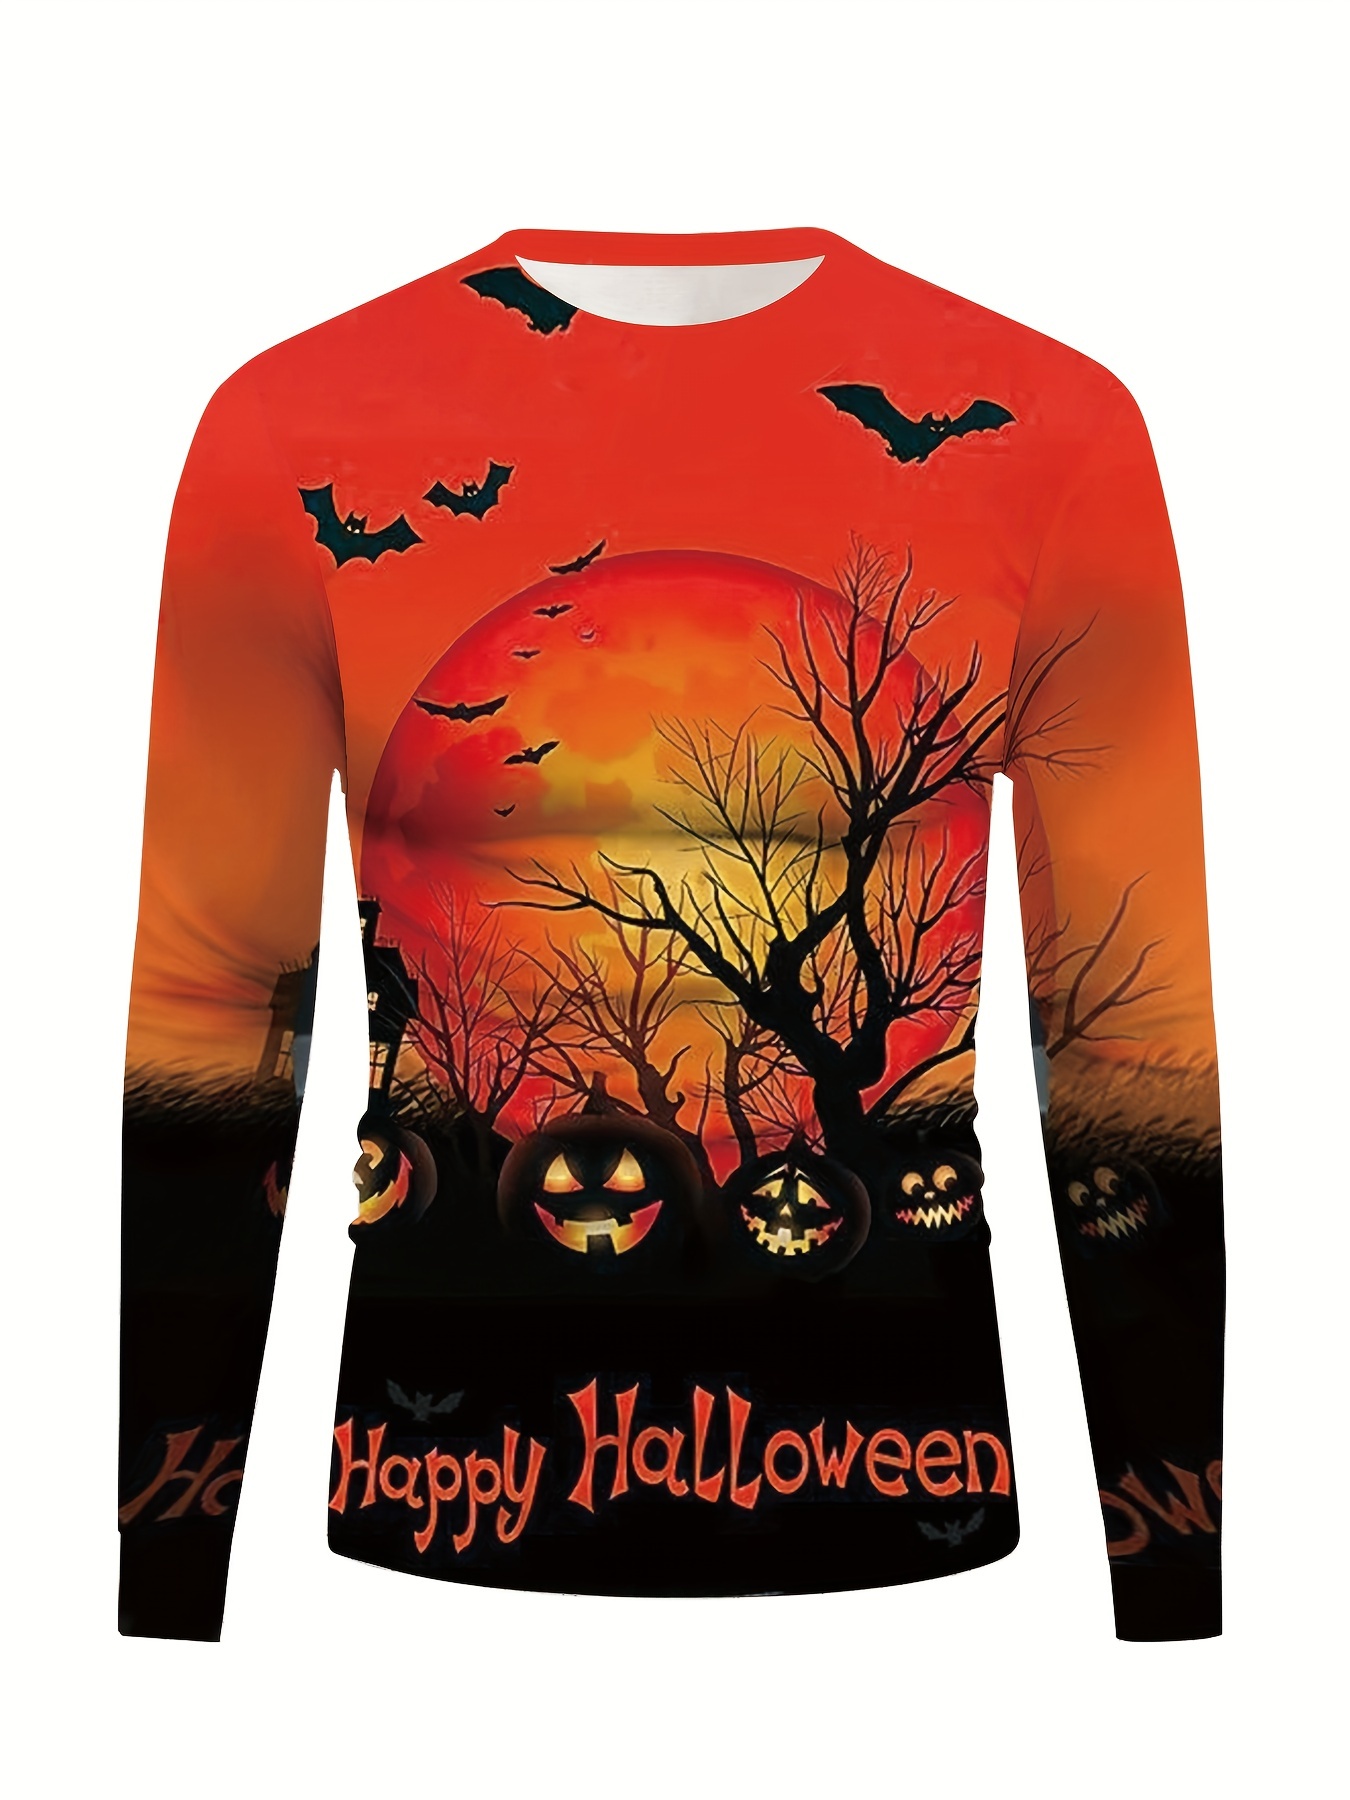 Buy Mens Halloween T-Shirt,Crew Neck Long Sleeve 3D Printed